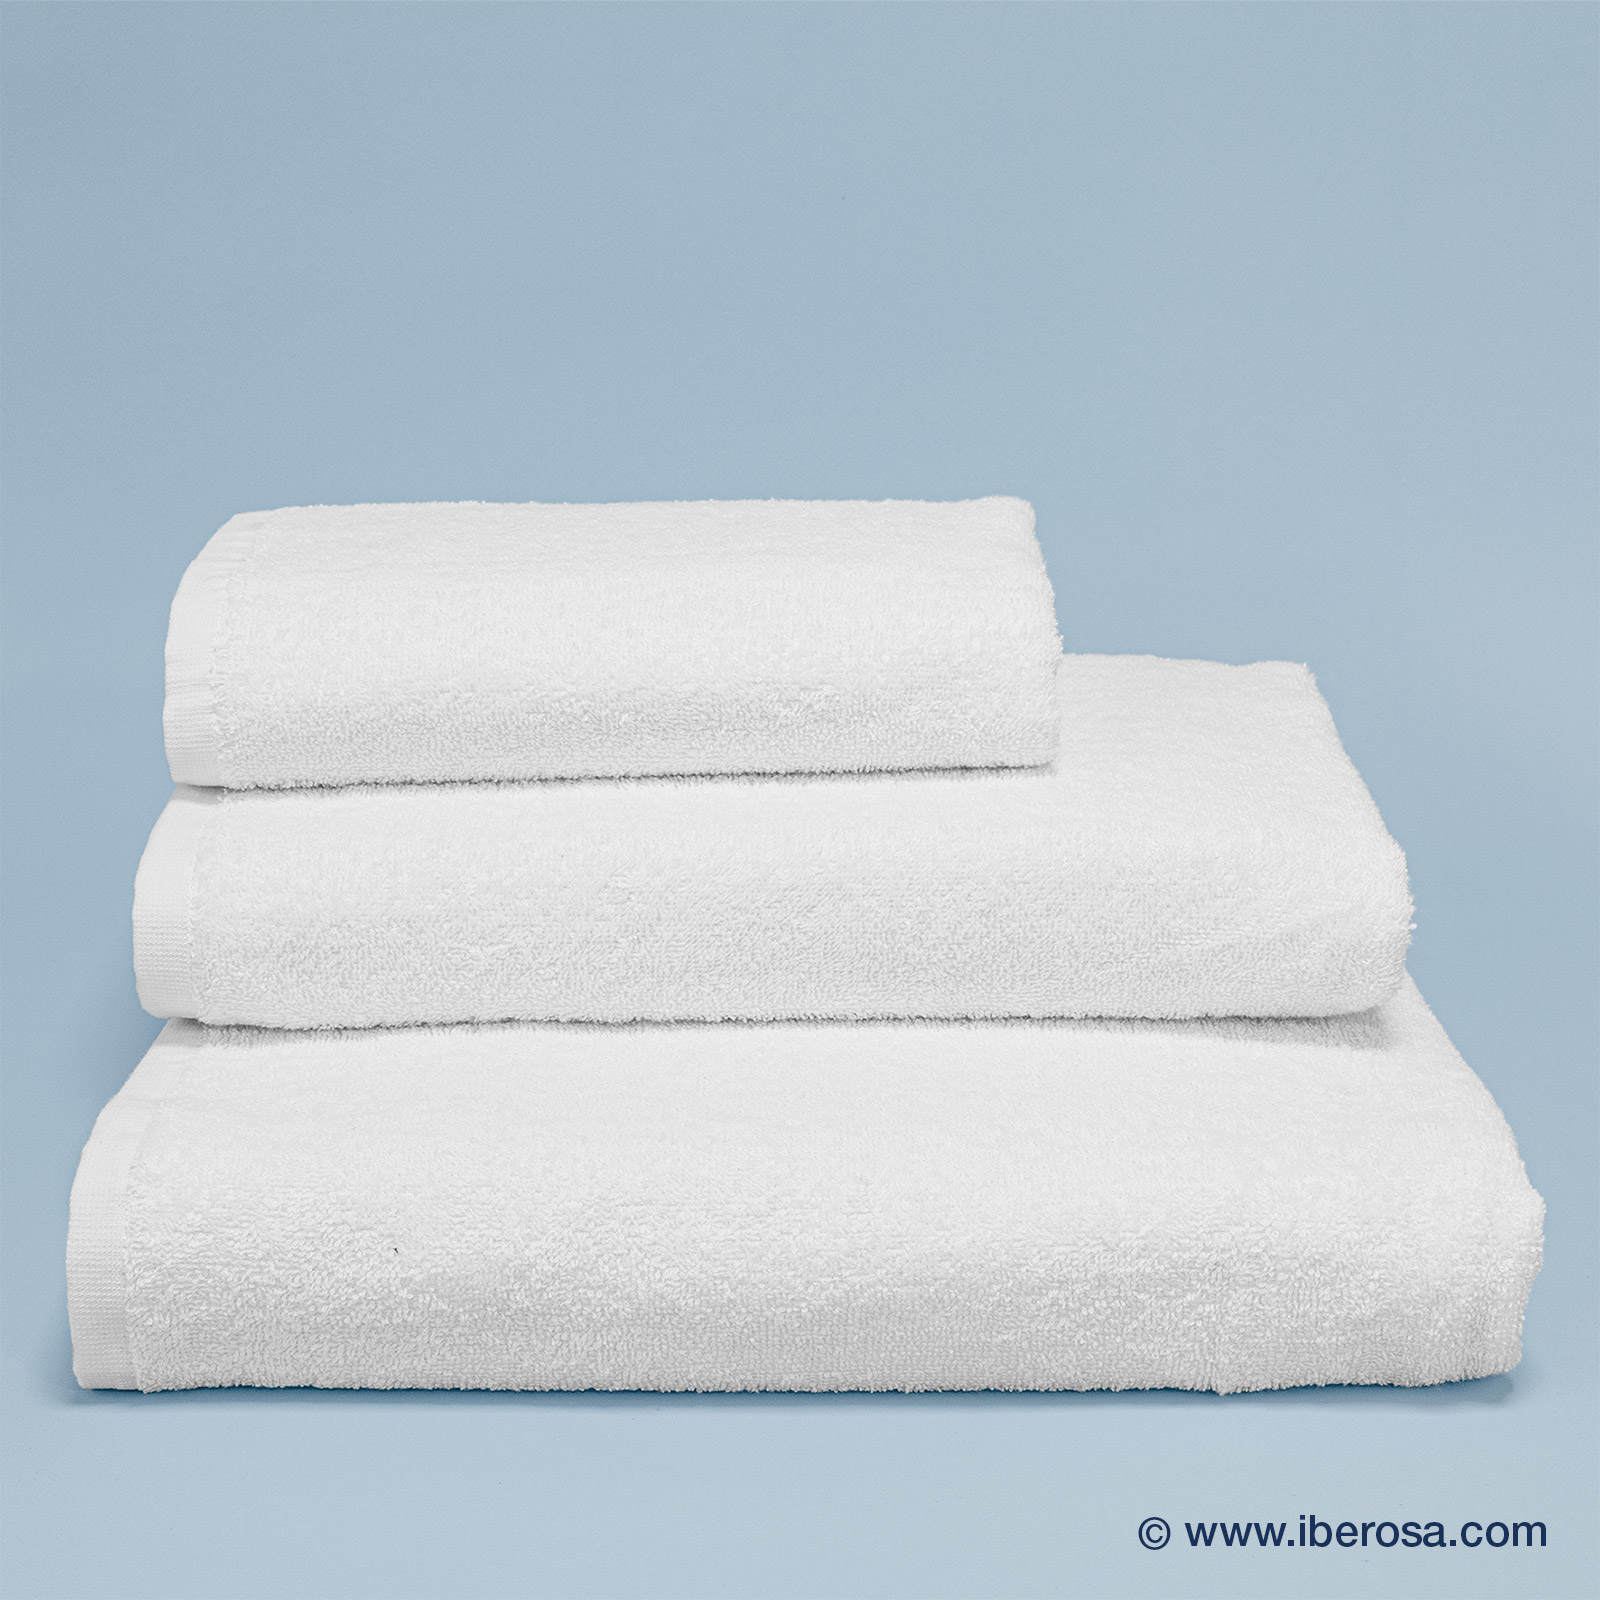 iberosa-toallas-lisa-420-gramos